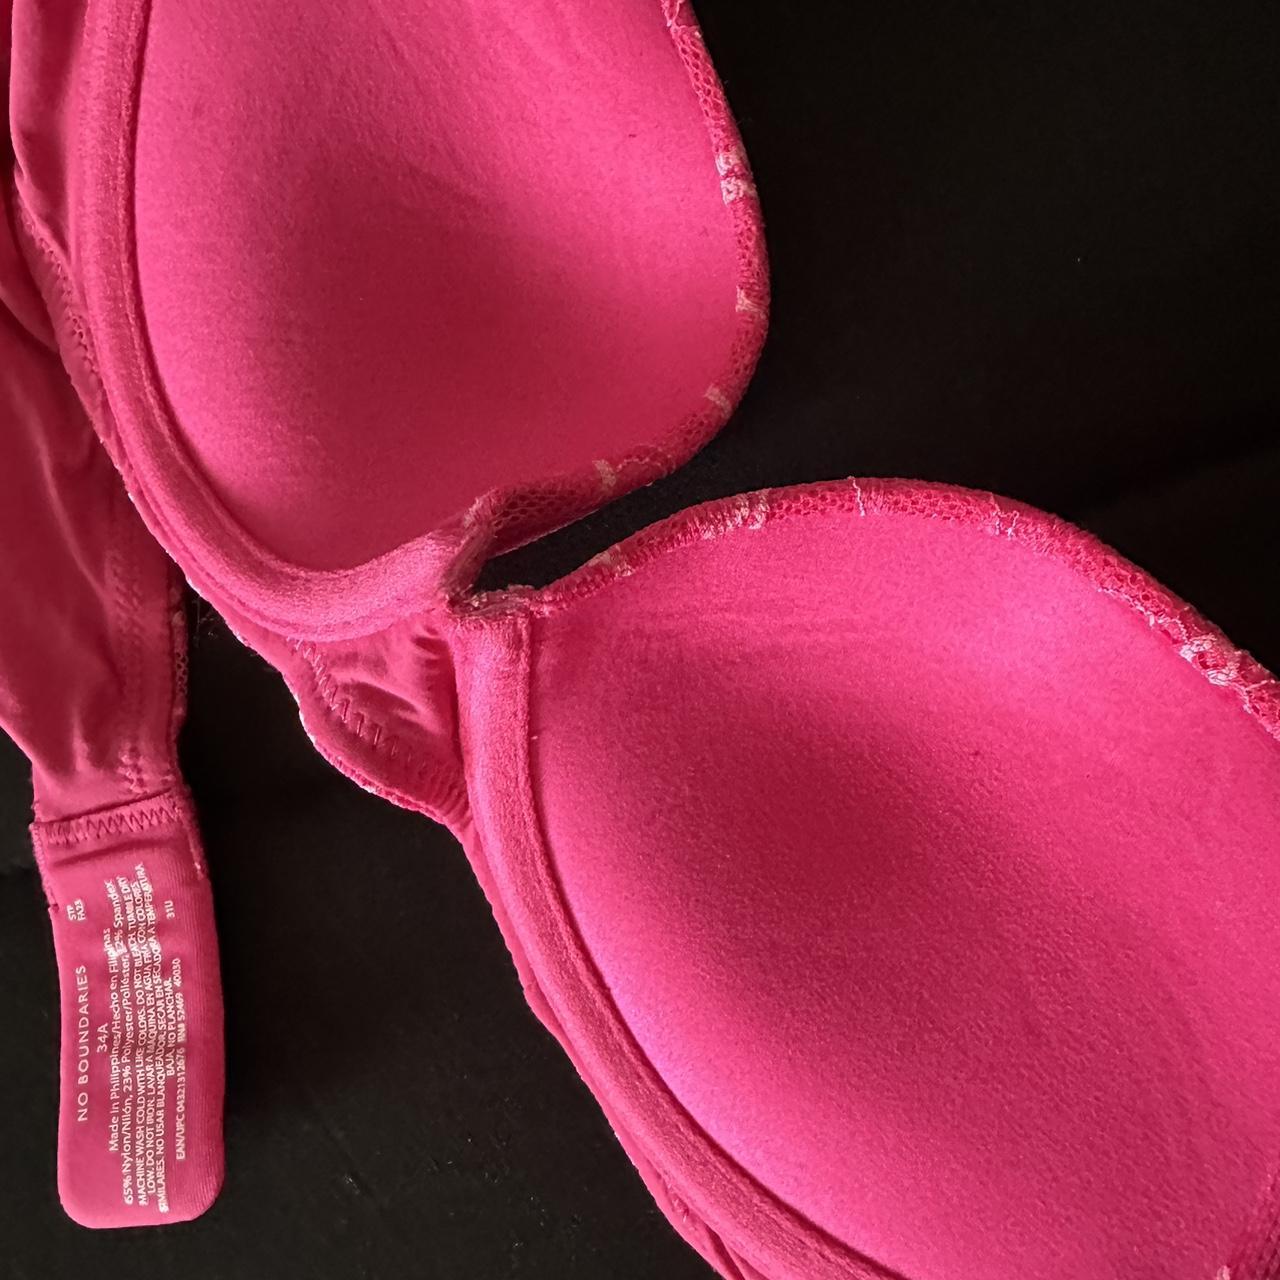 NWOT Floral pink bra slight push up size 34A never